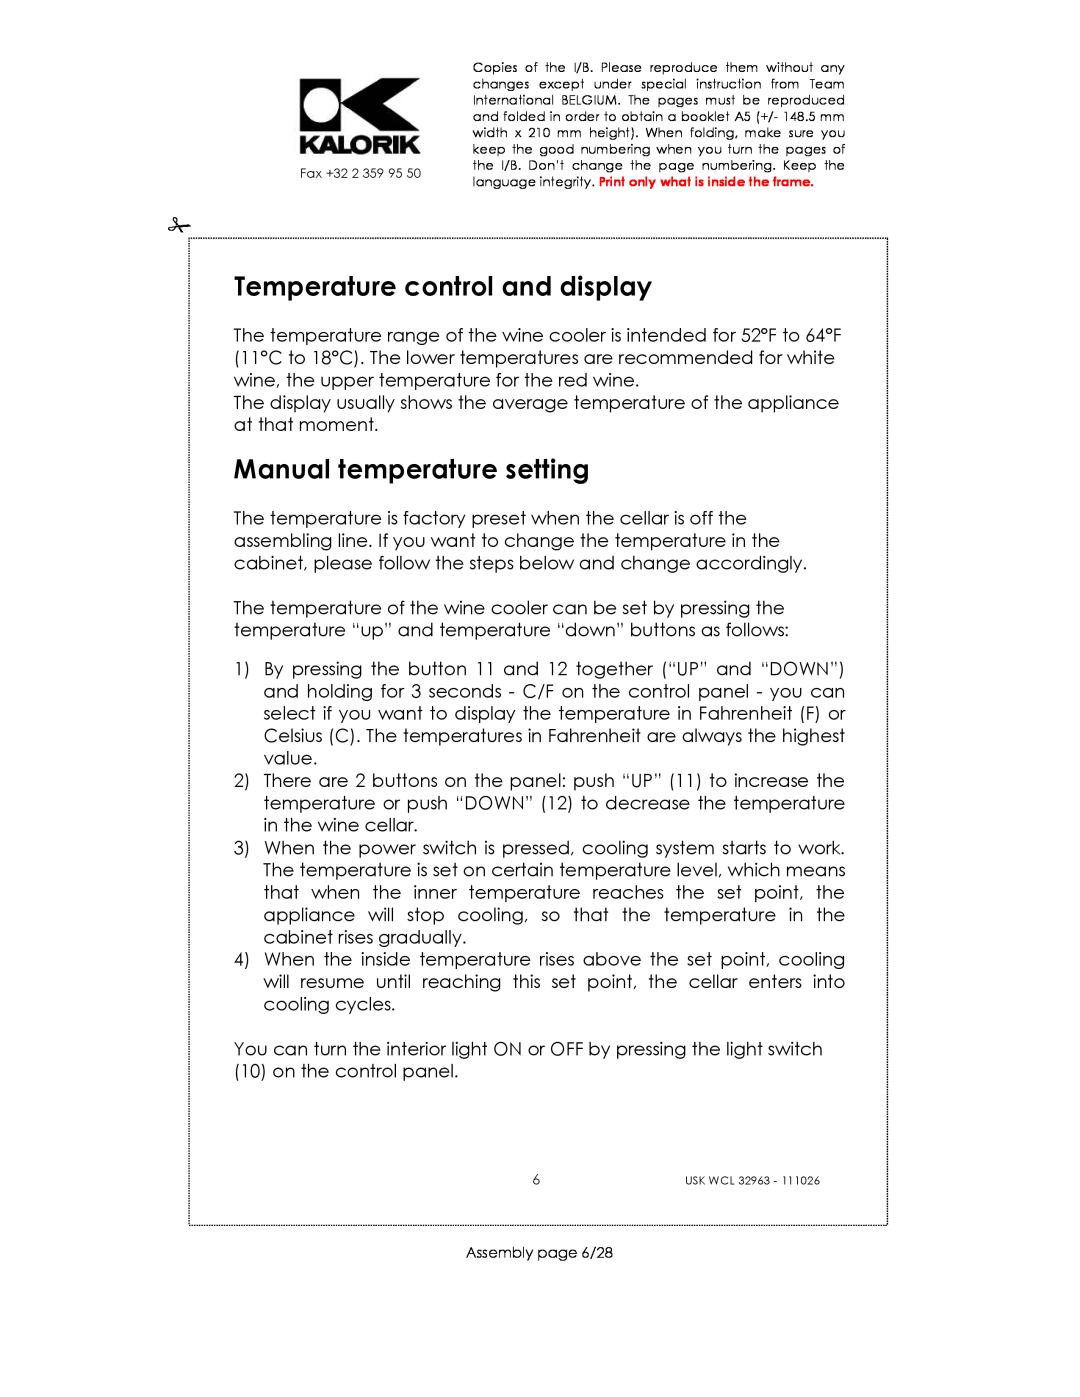 Kalorik USK WCL 32963 manual Temperature control and display, Manual temperature setting, Assembly page 6/28 